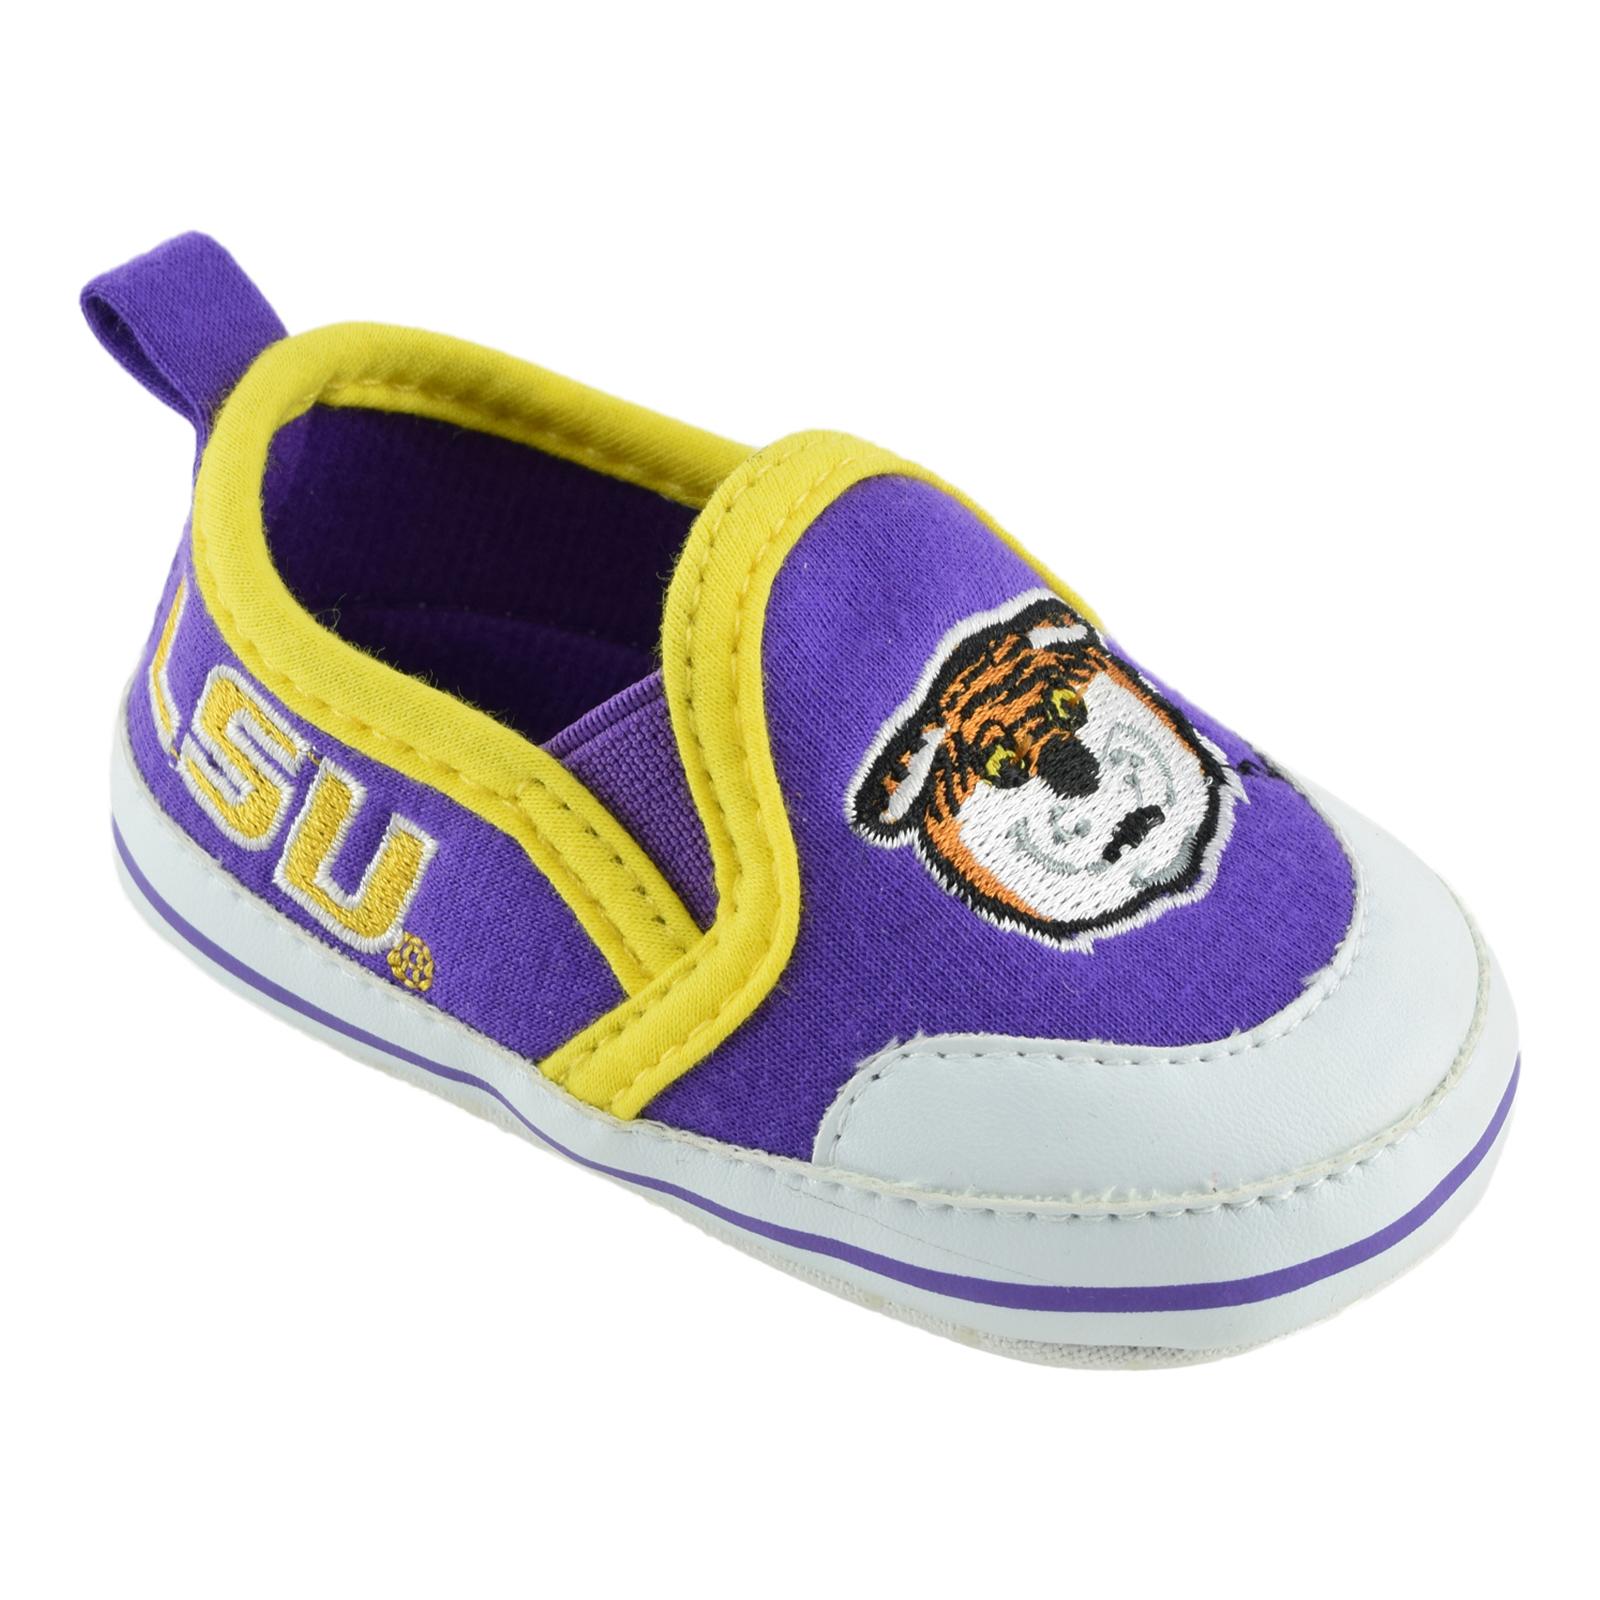 NCAA Newborn & Infant Louisiana State University Tigers Soft Sole Shoes